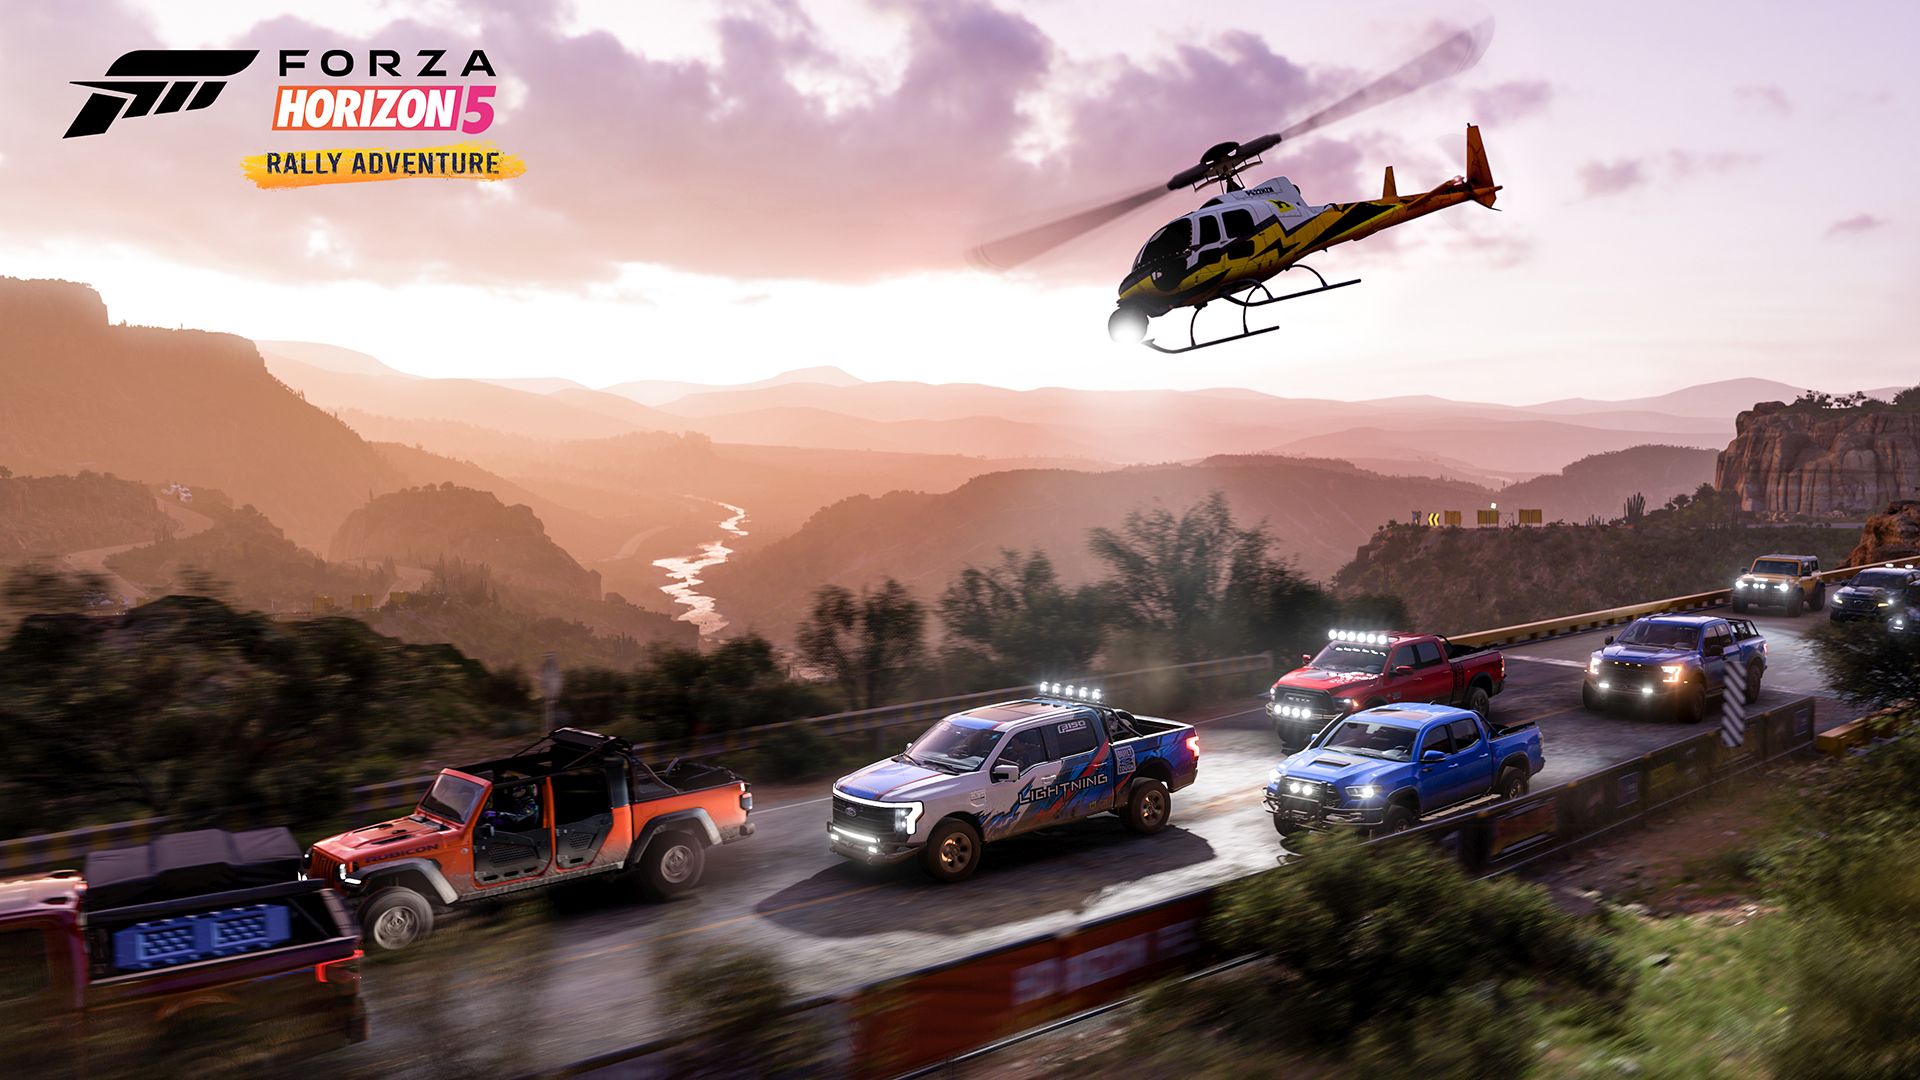 Video For Horizon 5 Rallye-Abenteuer ist ab dem 29. März verfügbar